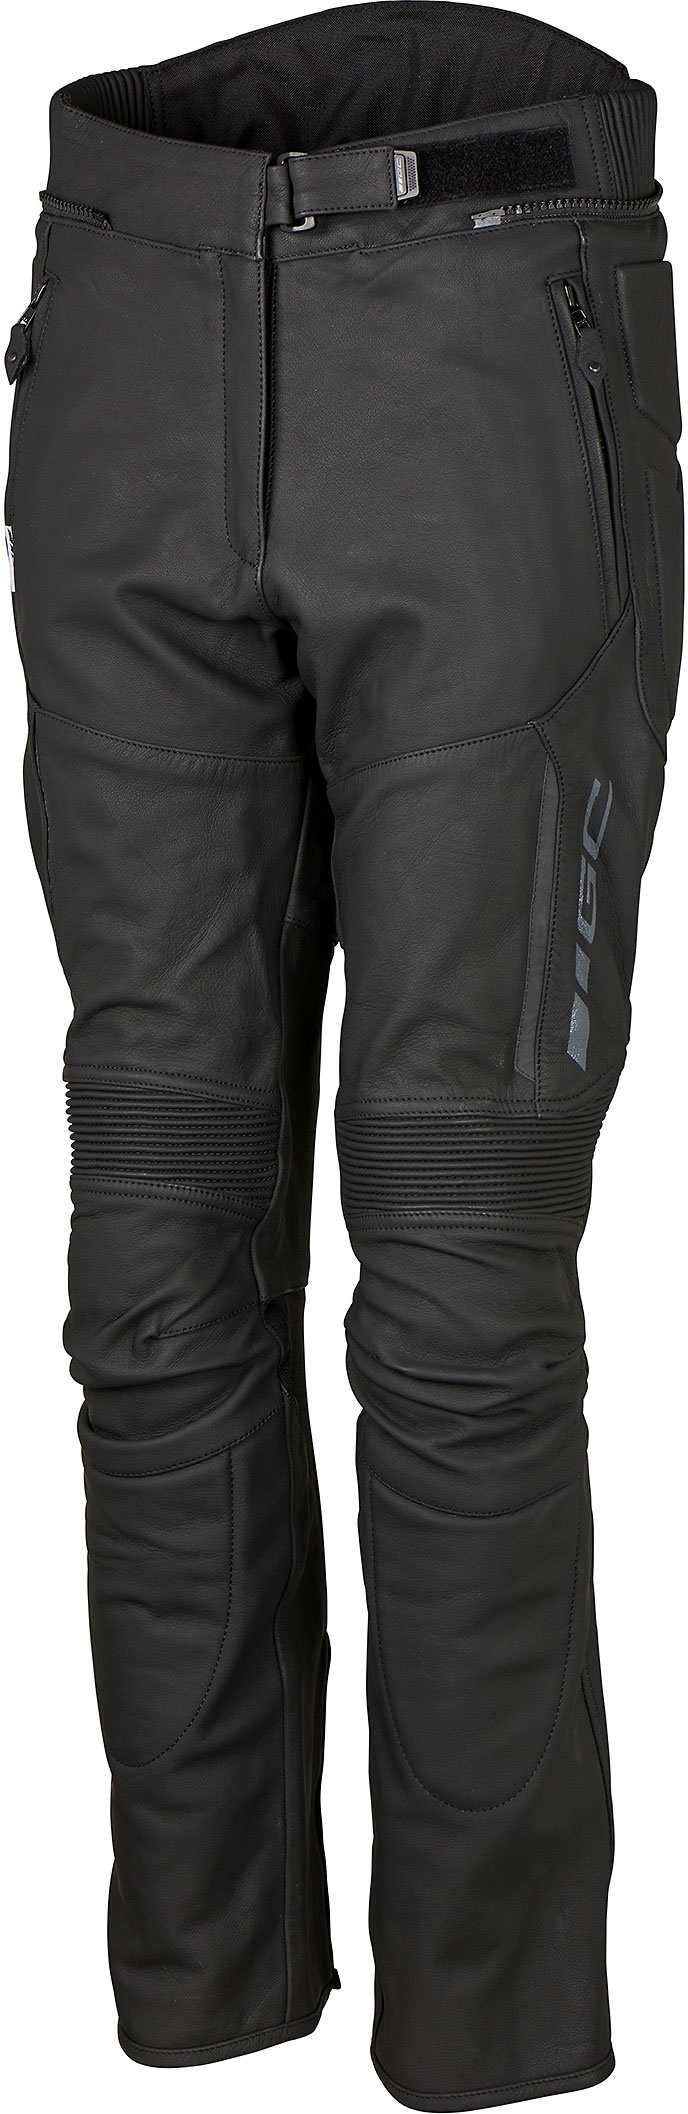 GC Bikewear Sienna, pantalon en cuir pour femmes - Noir - 42